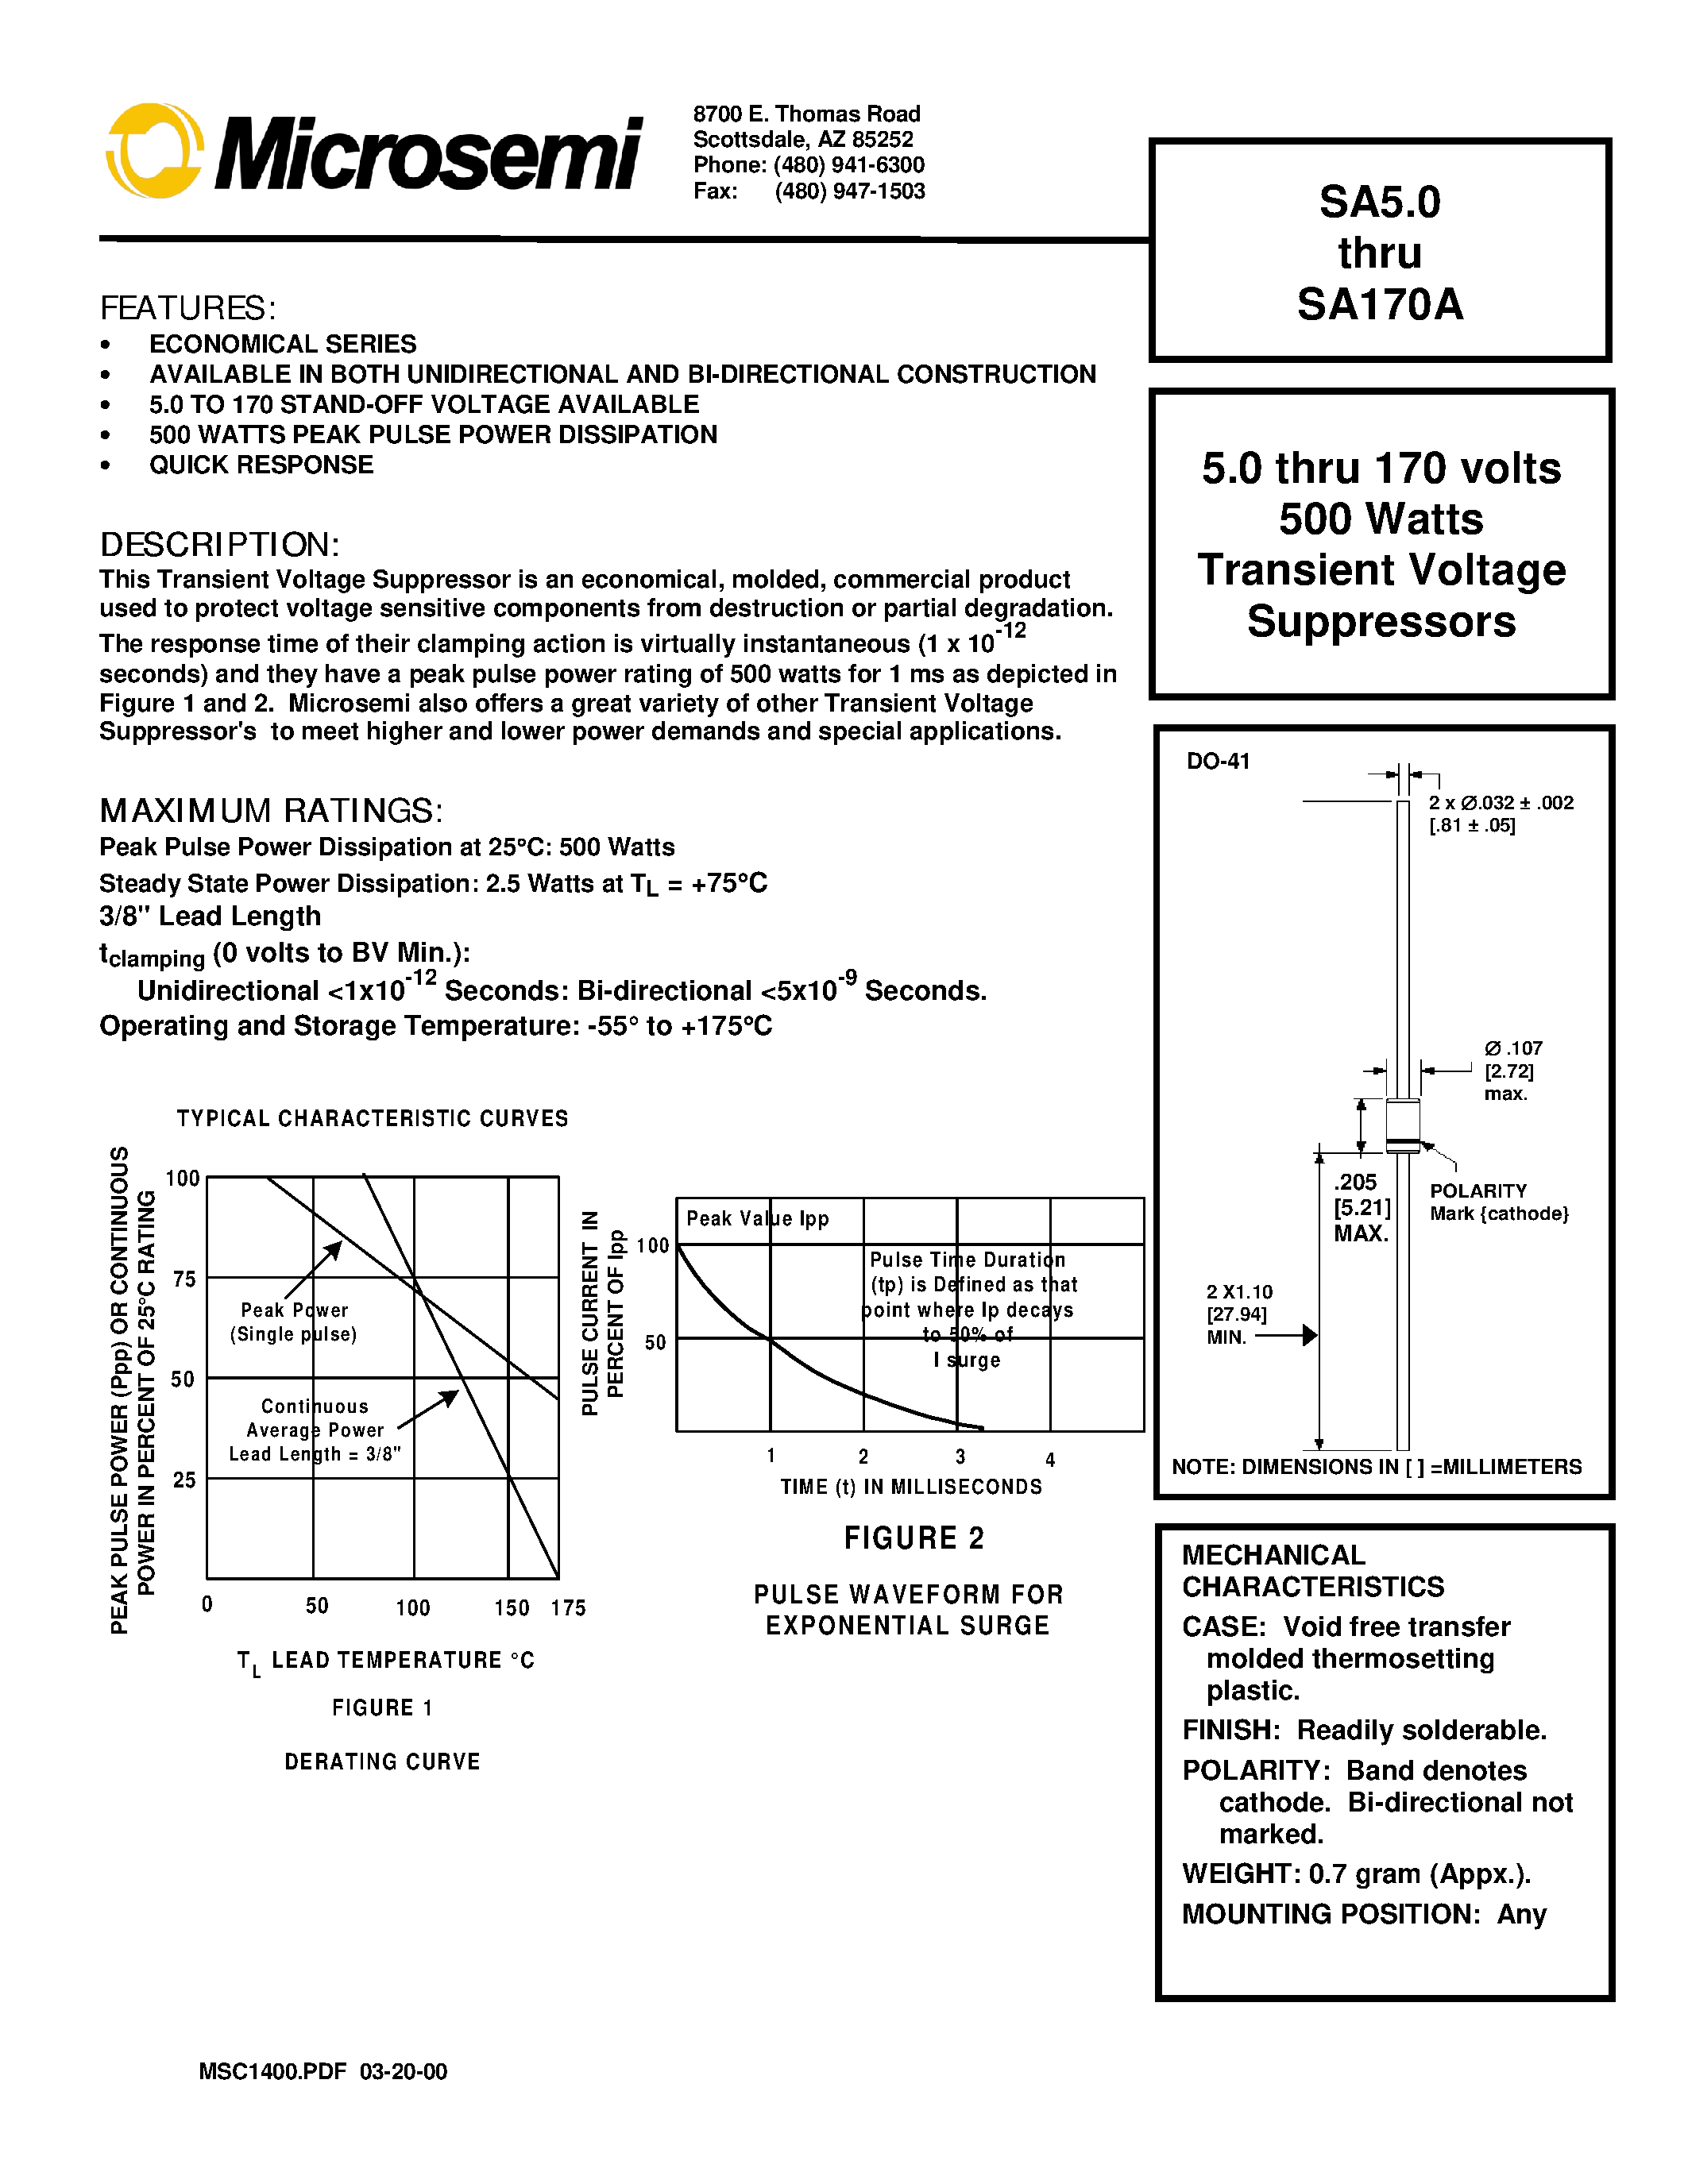 Datasheet SA36A - 5.0 thru 170 volts 500 Watts Transient Voltage Suppressors page 1